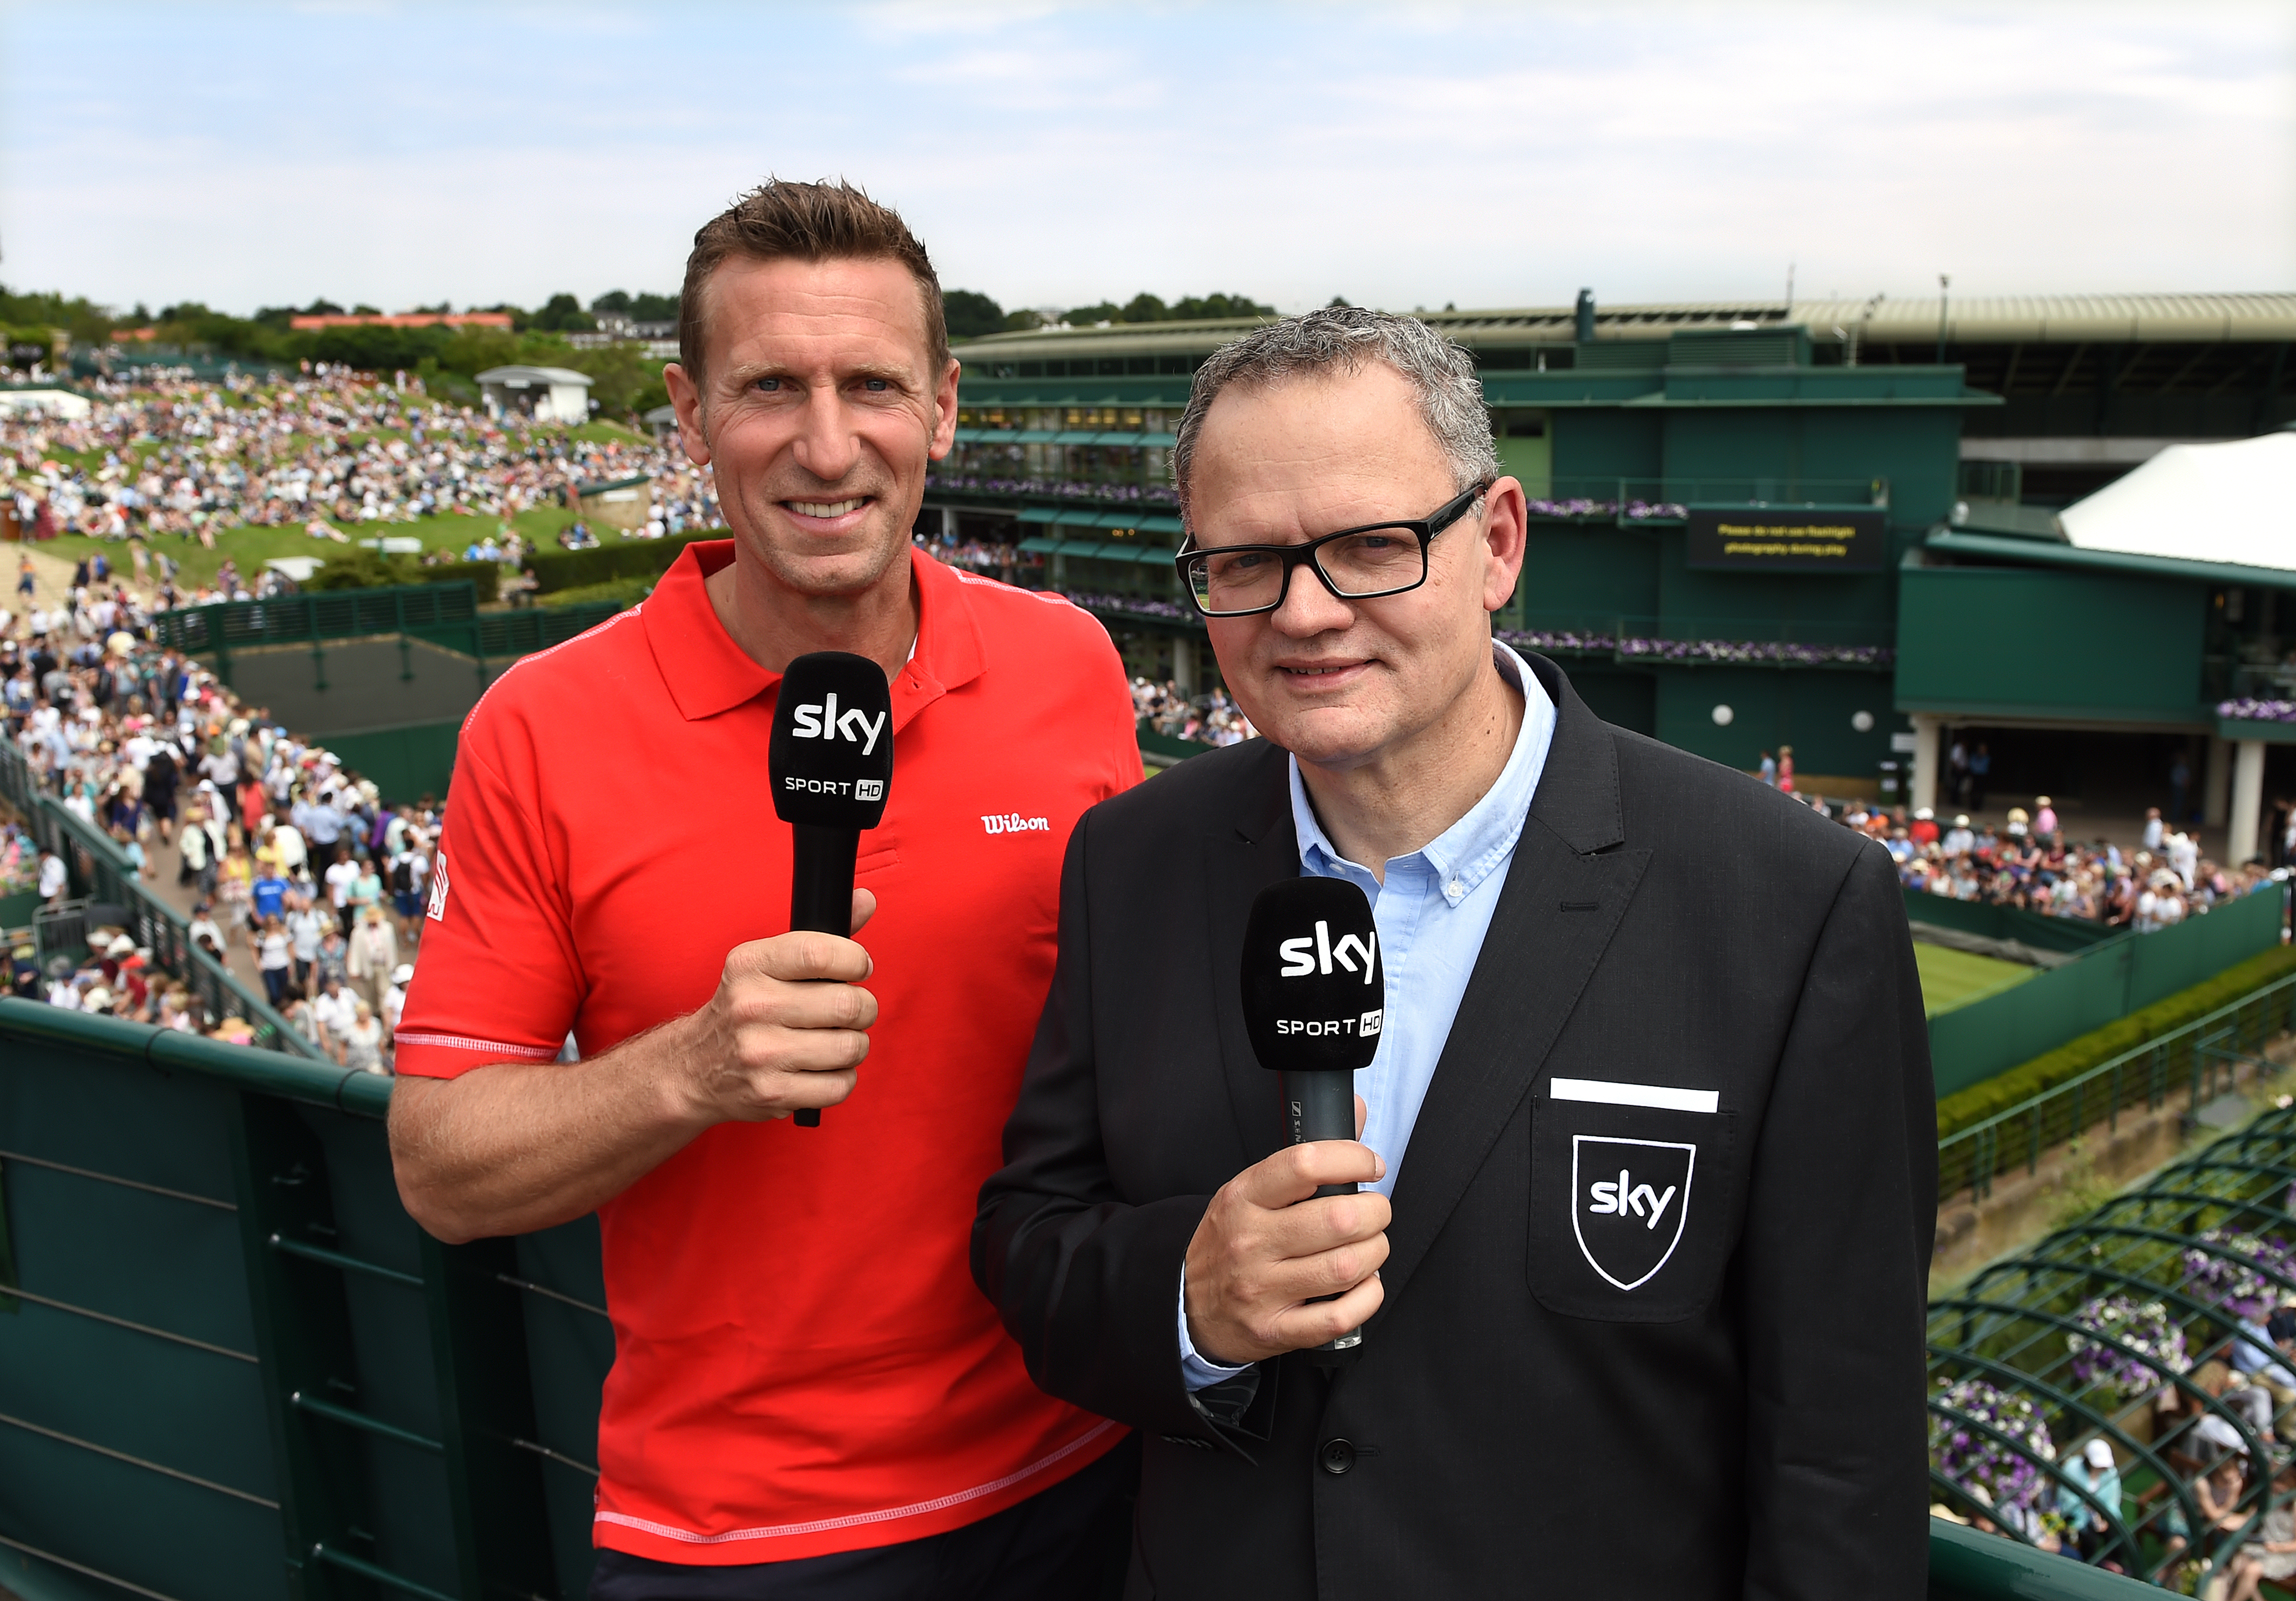 Spiel, Satz, Sieg Sky sendet 350 Stunden live aus Wimbledon Presseportal